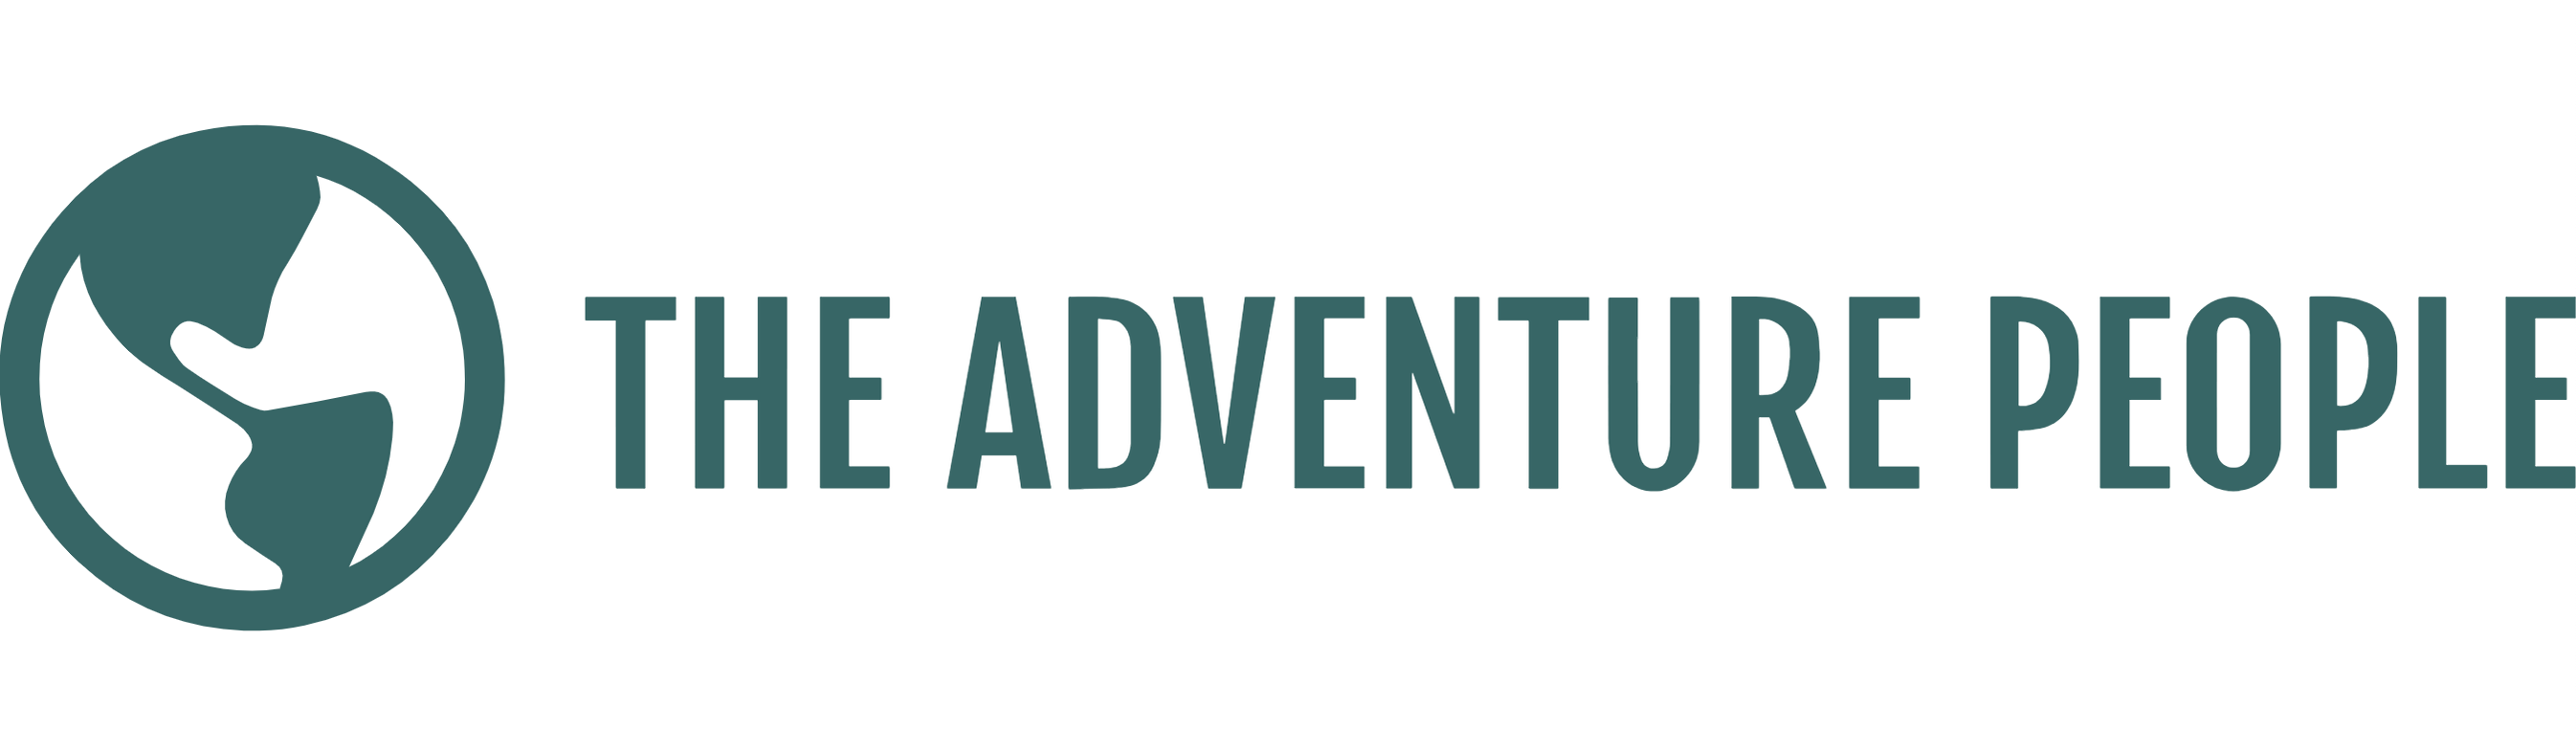 The Adventure people's logo